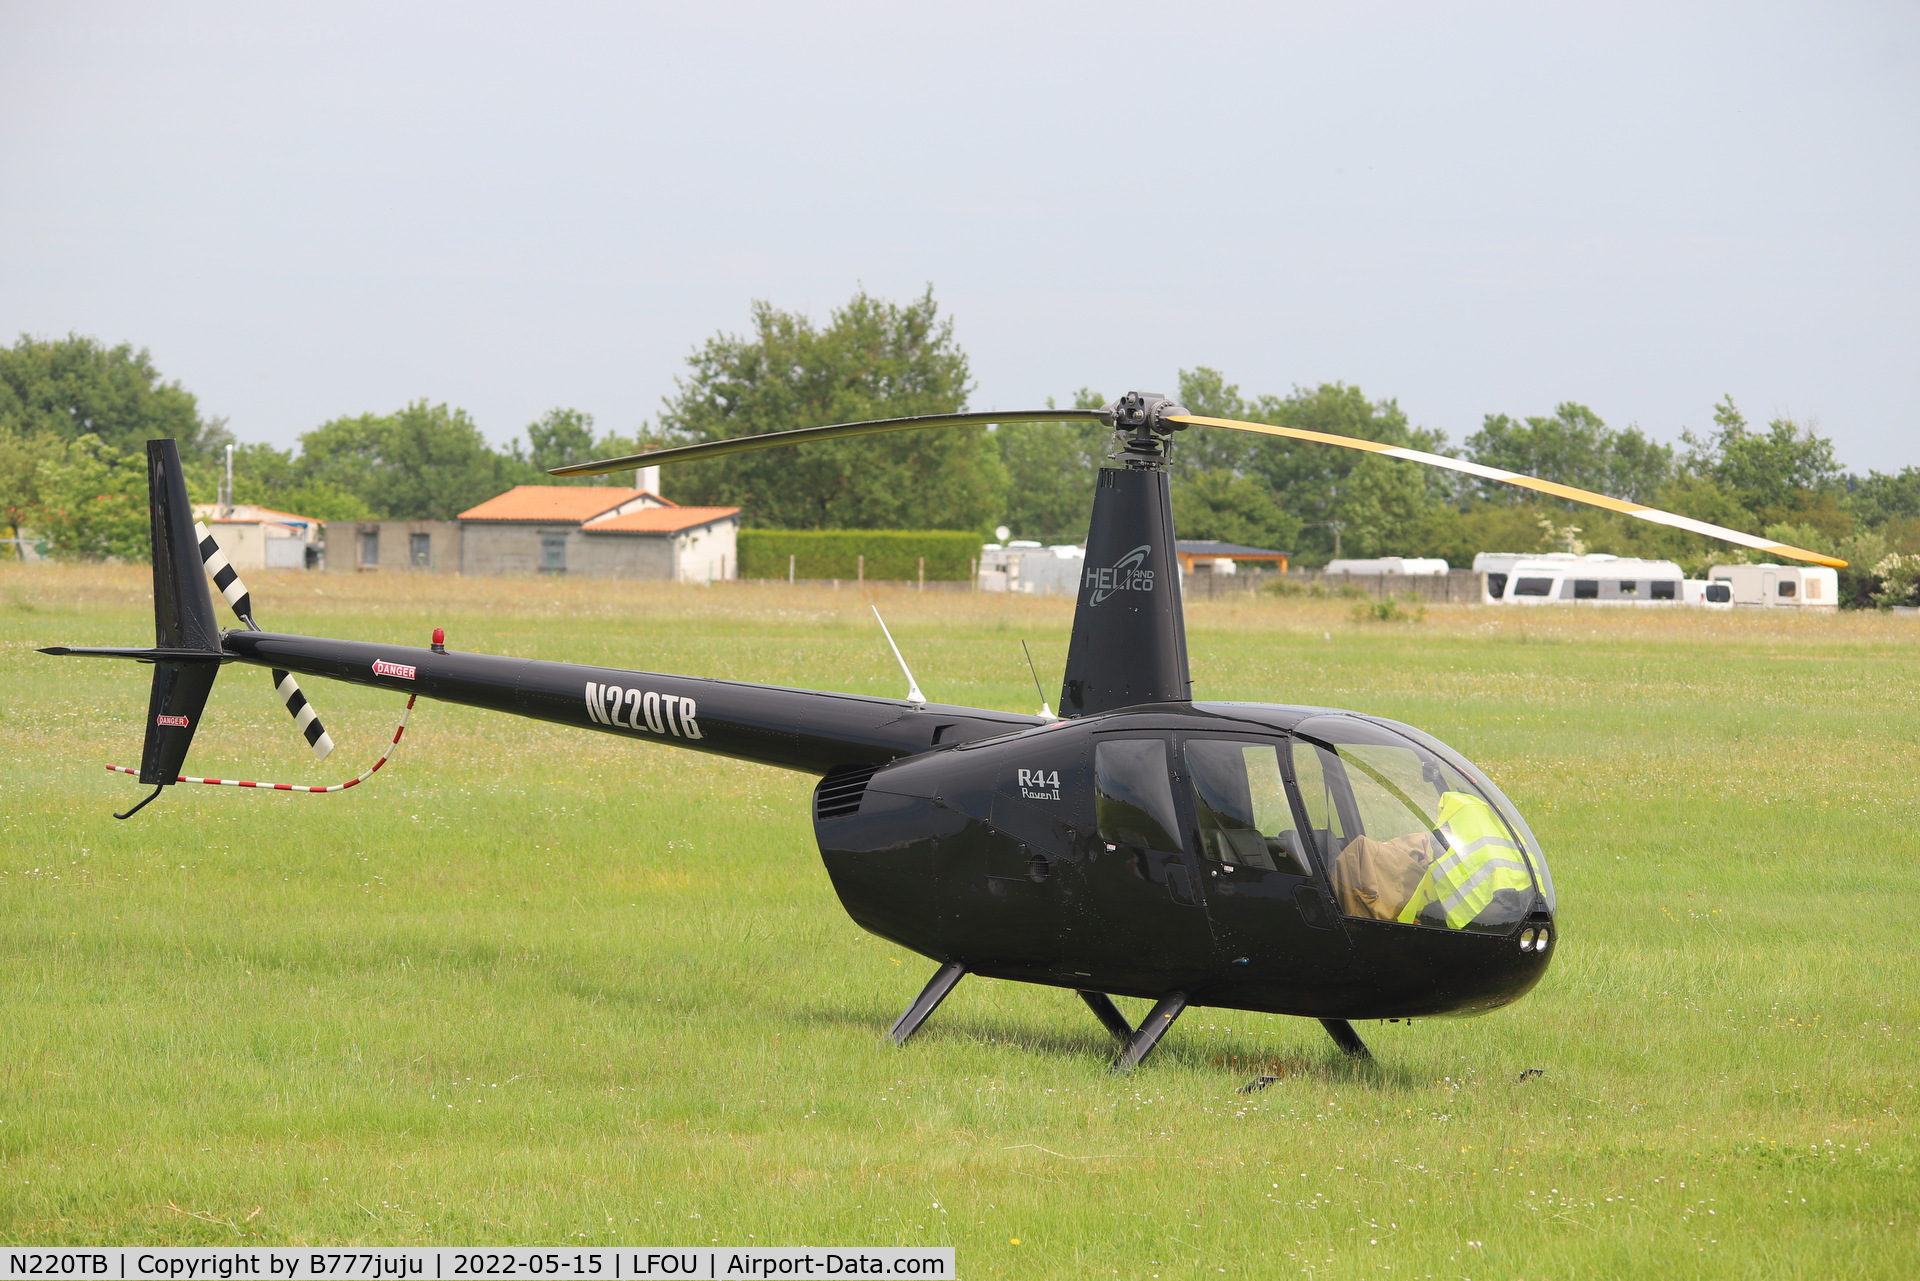 N220TB, 2006 Robinson R44 Raven II C/N 11445, at Helico 2022 Cholet